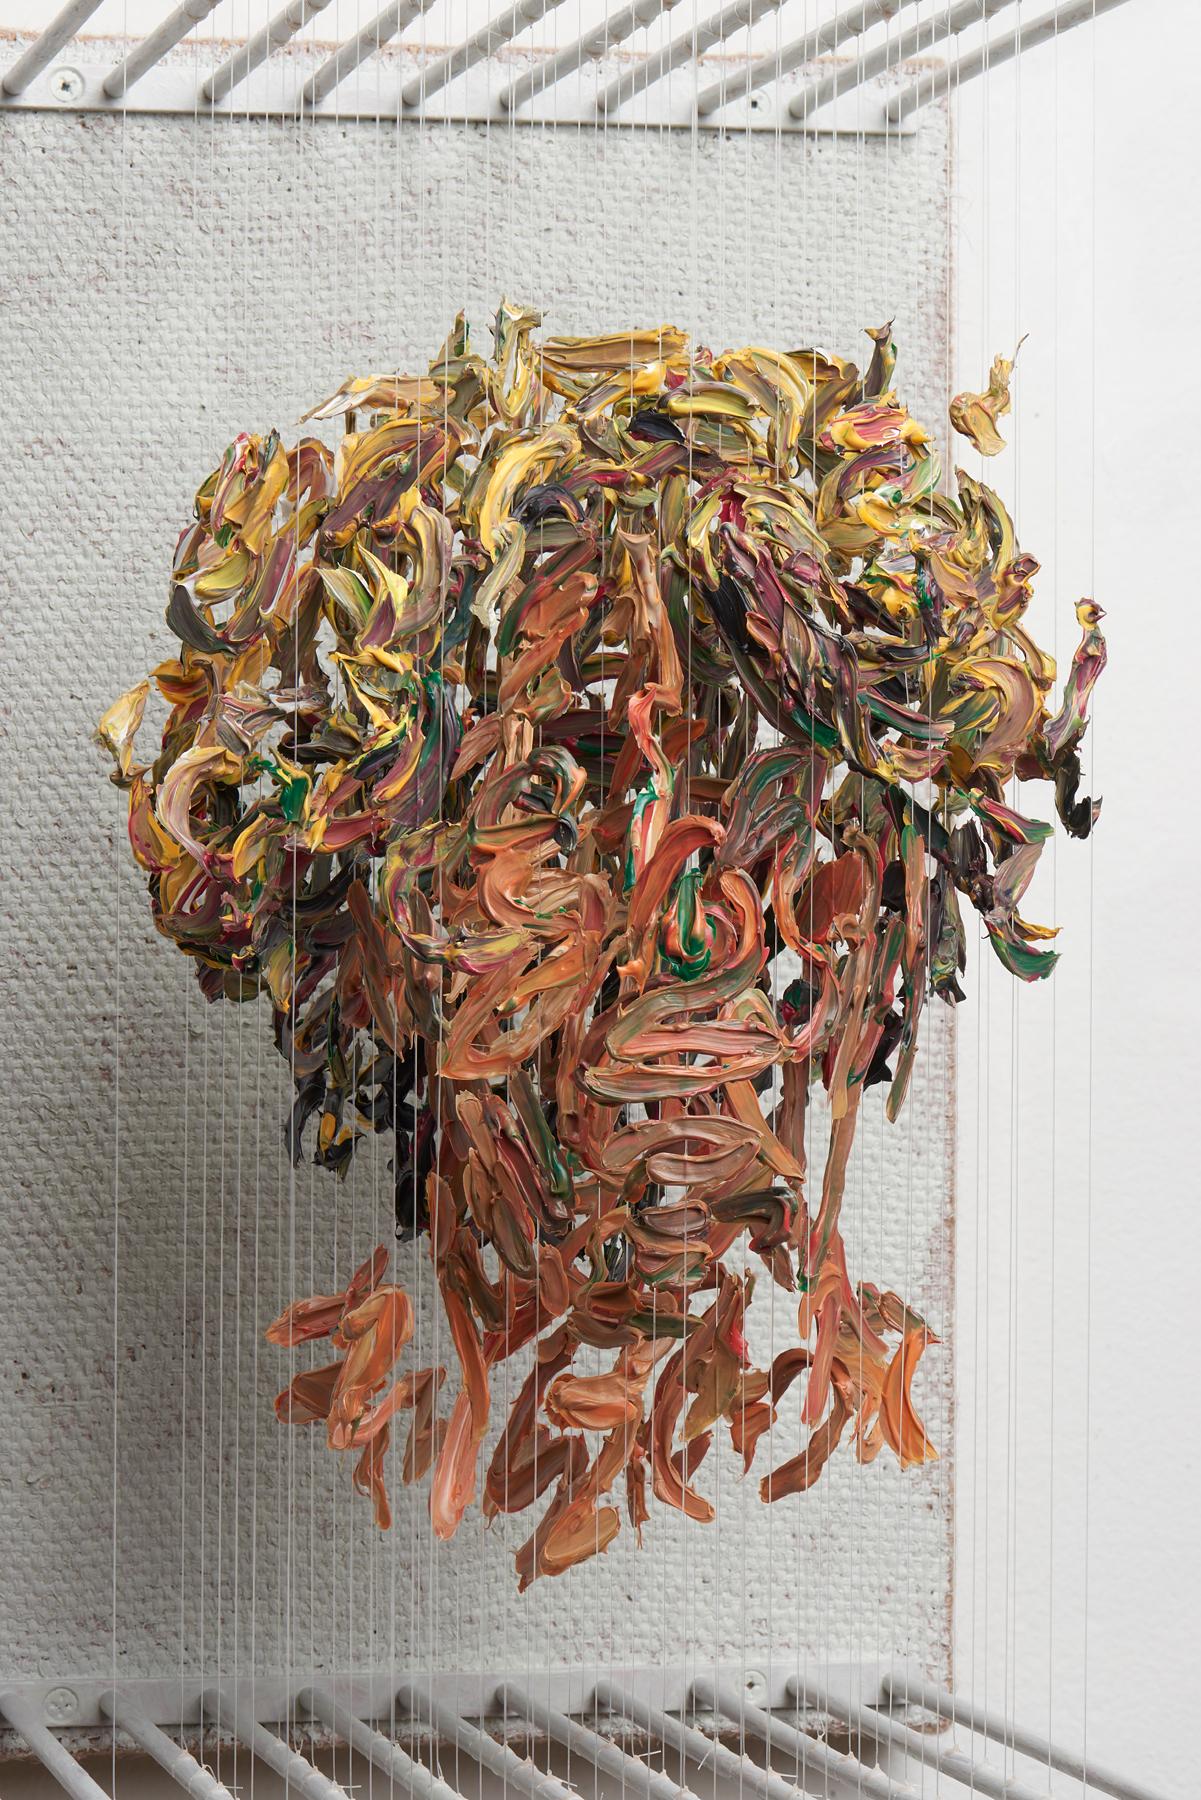 Chris Dorosz Figurative Painting - SOH - figurative portrait sculpture in 3D with suspended dried paint strokes